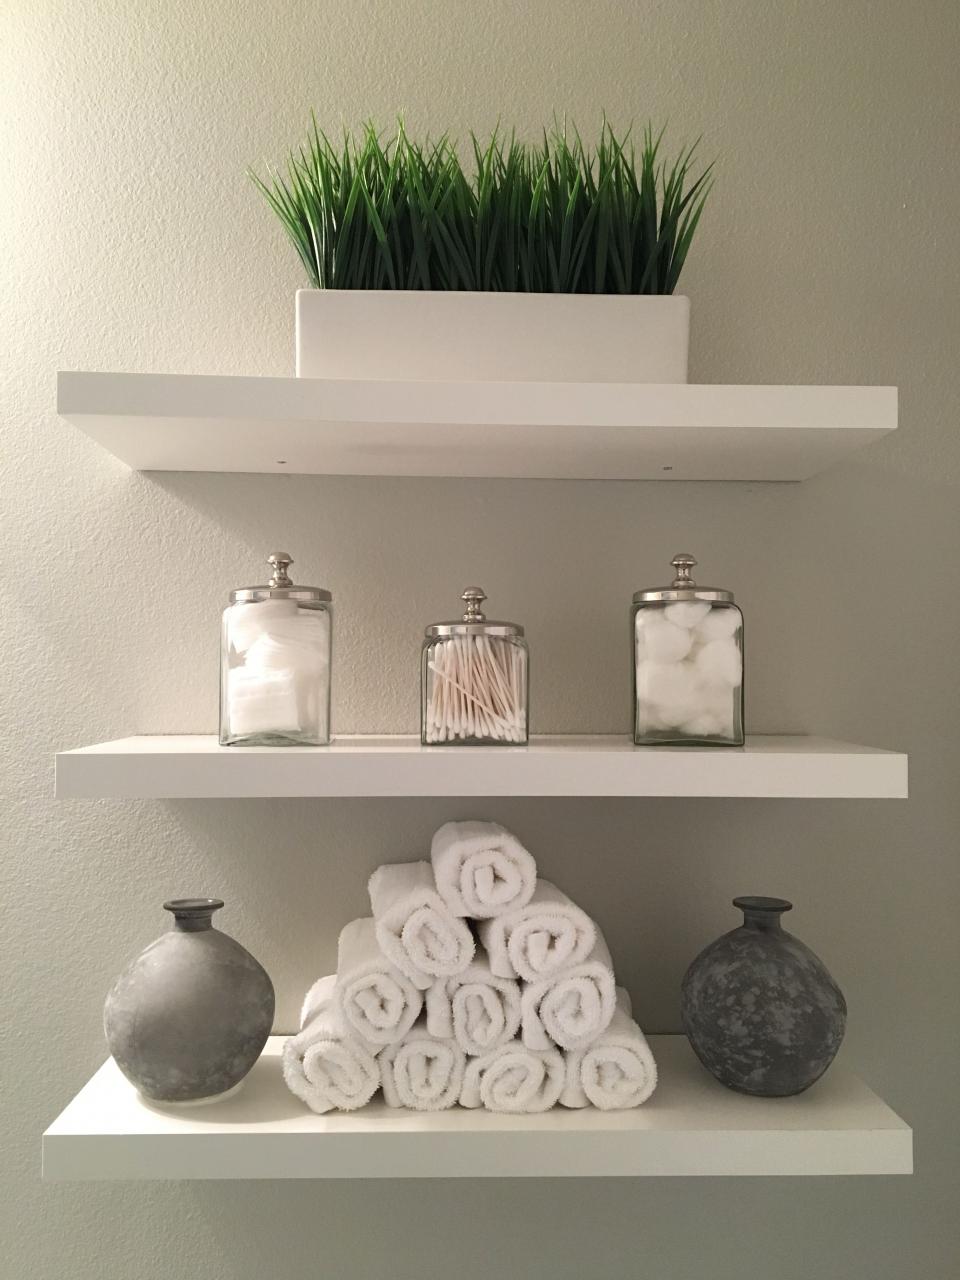 Bathroom, shelves, modern, clean, white and grey, added shelves, green